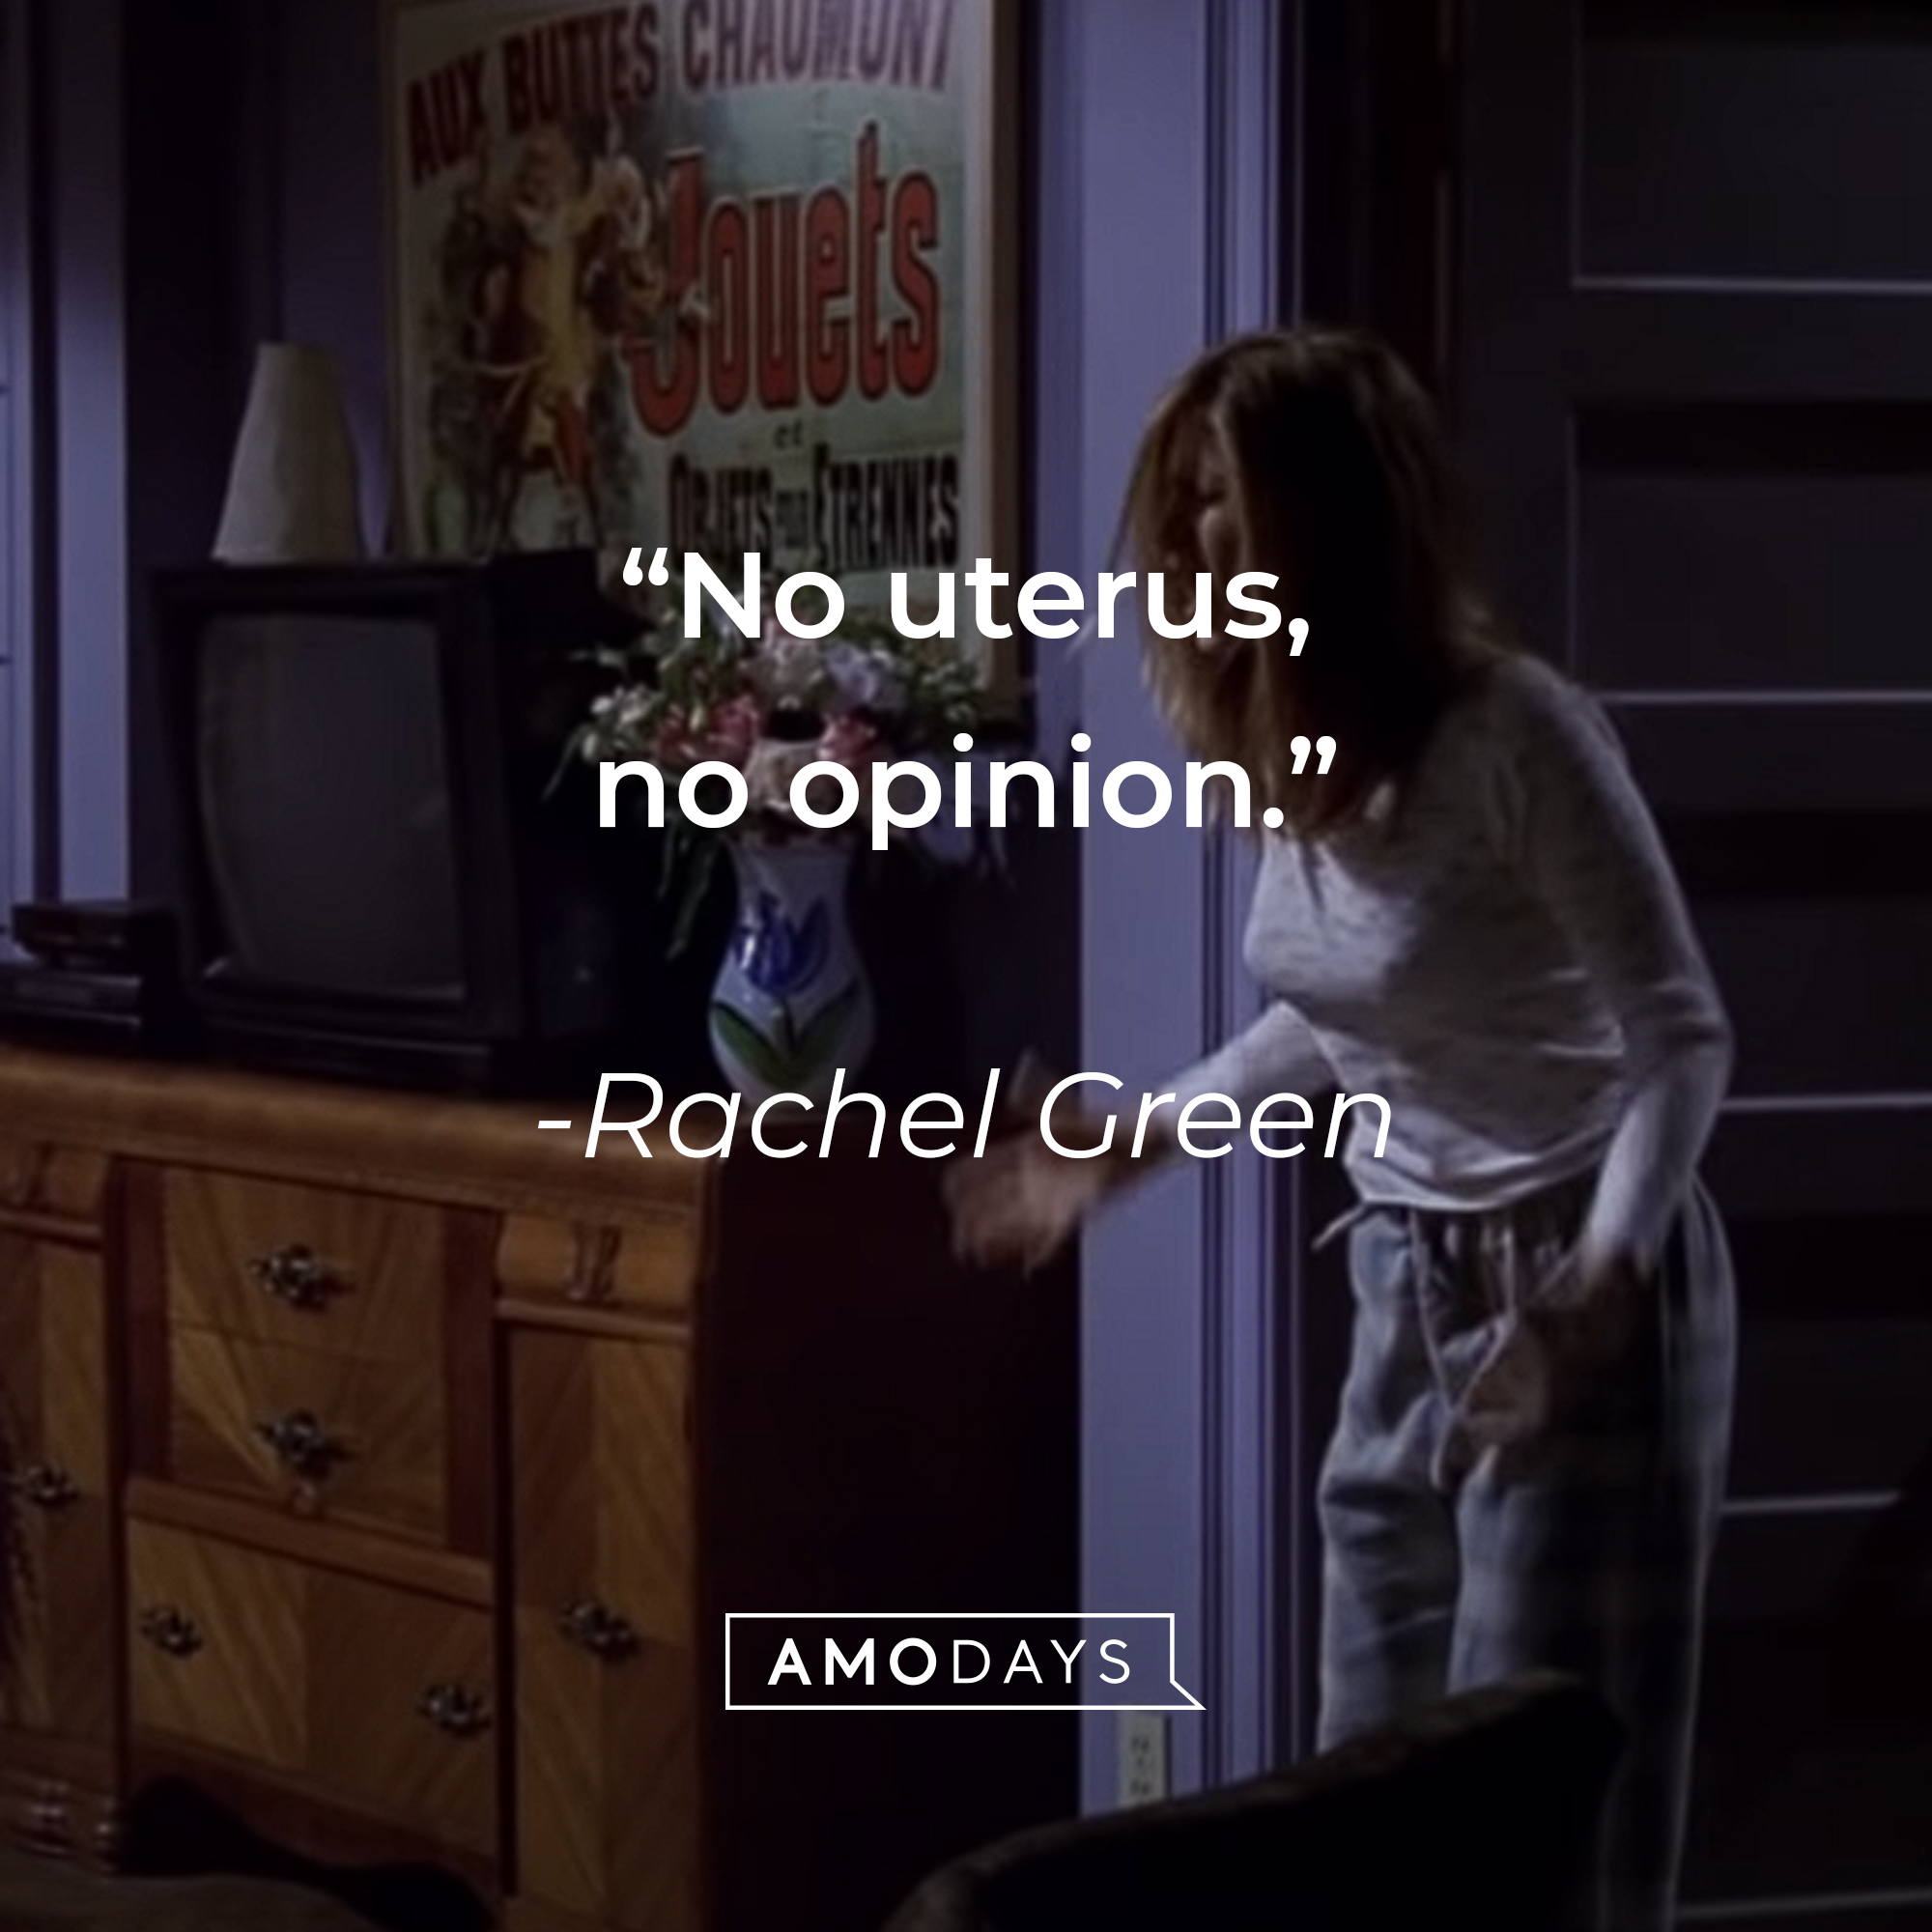 Rachel Green's quote: "No uterus, no opinion." | Source: youtube.com/warnerbrostv